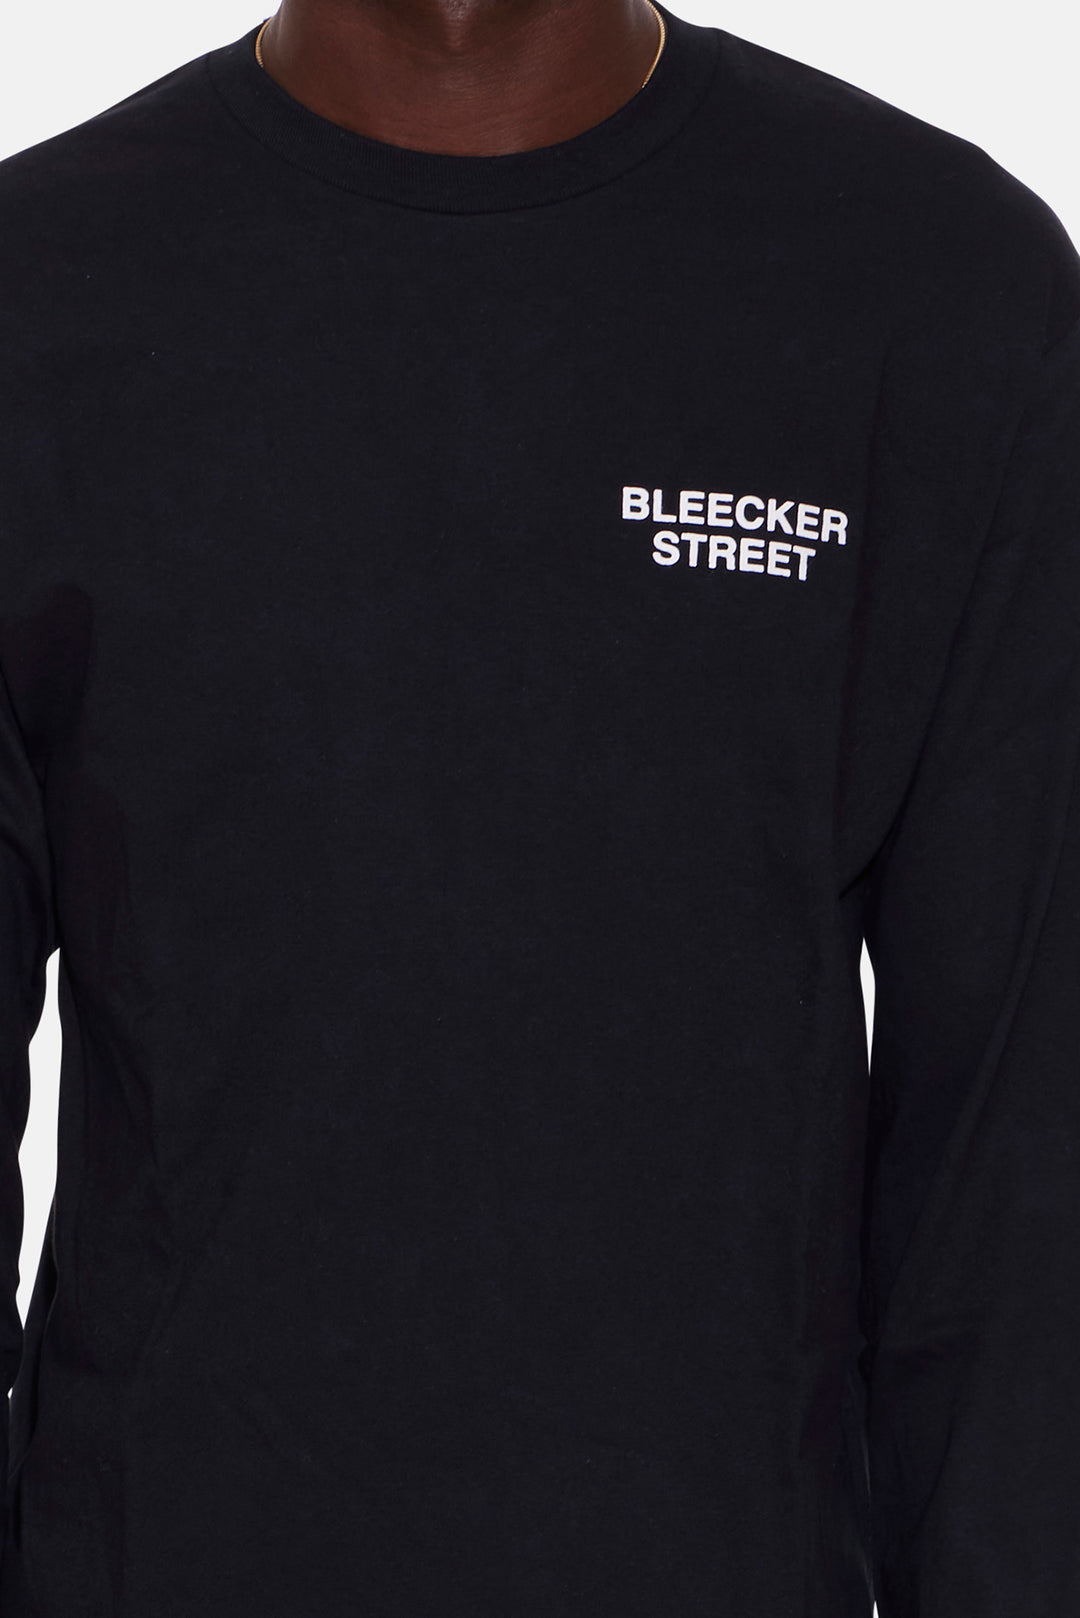 Bleecker Street Long Sleeve Black